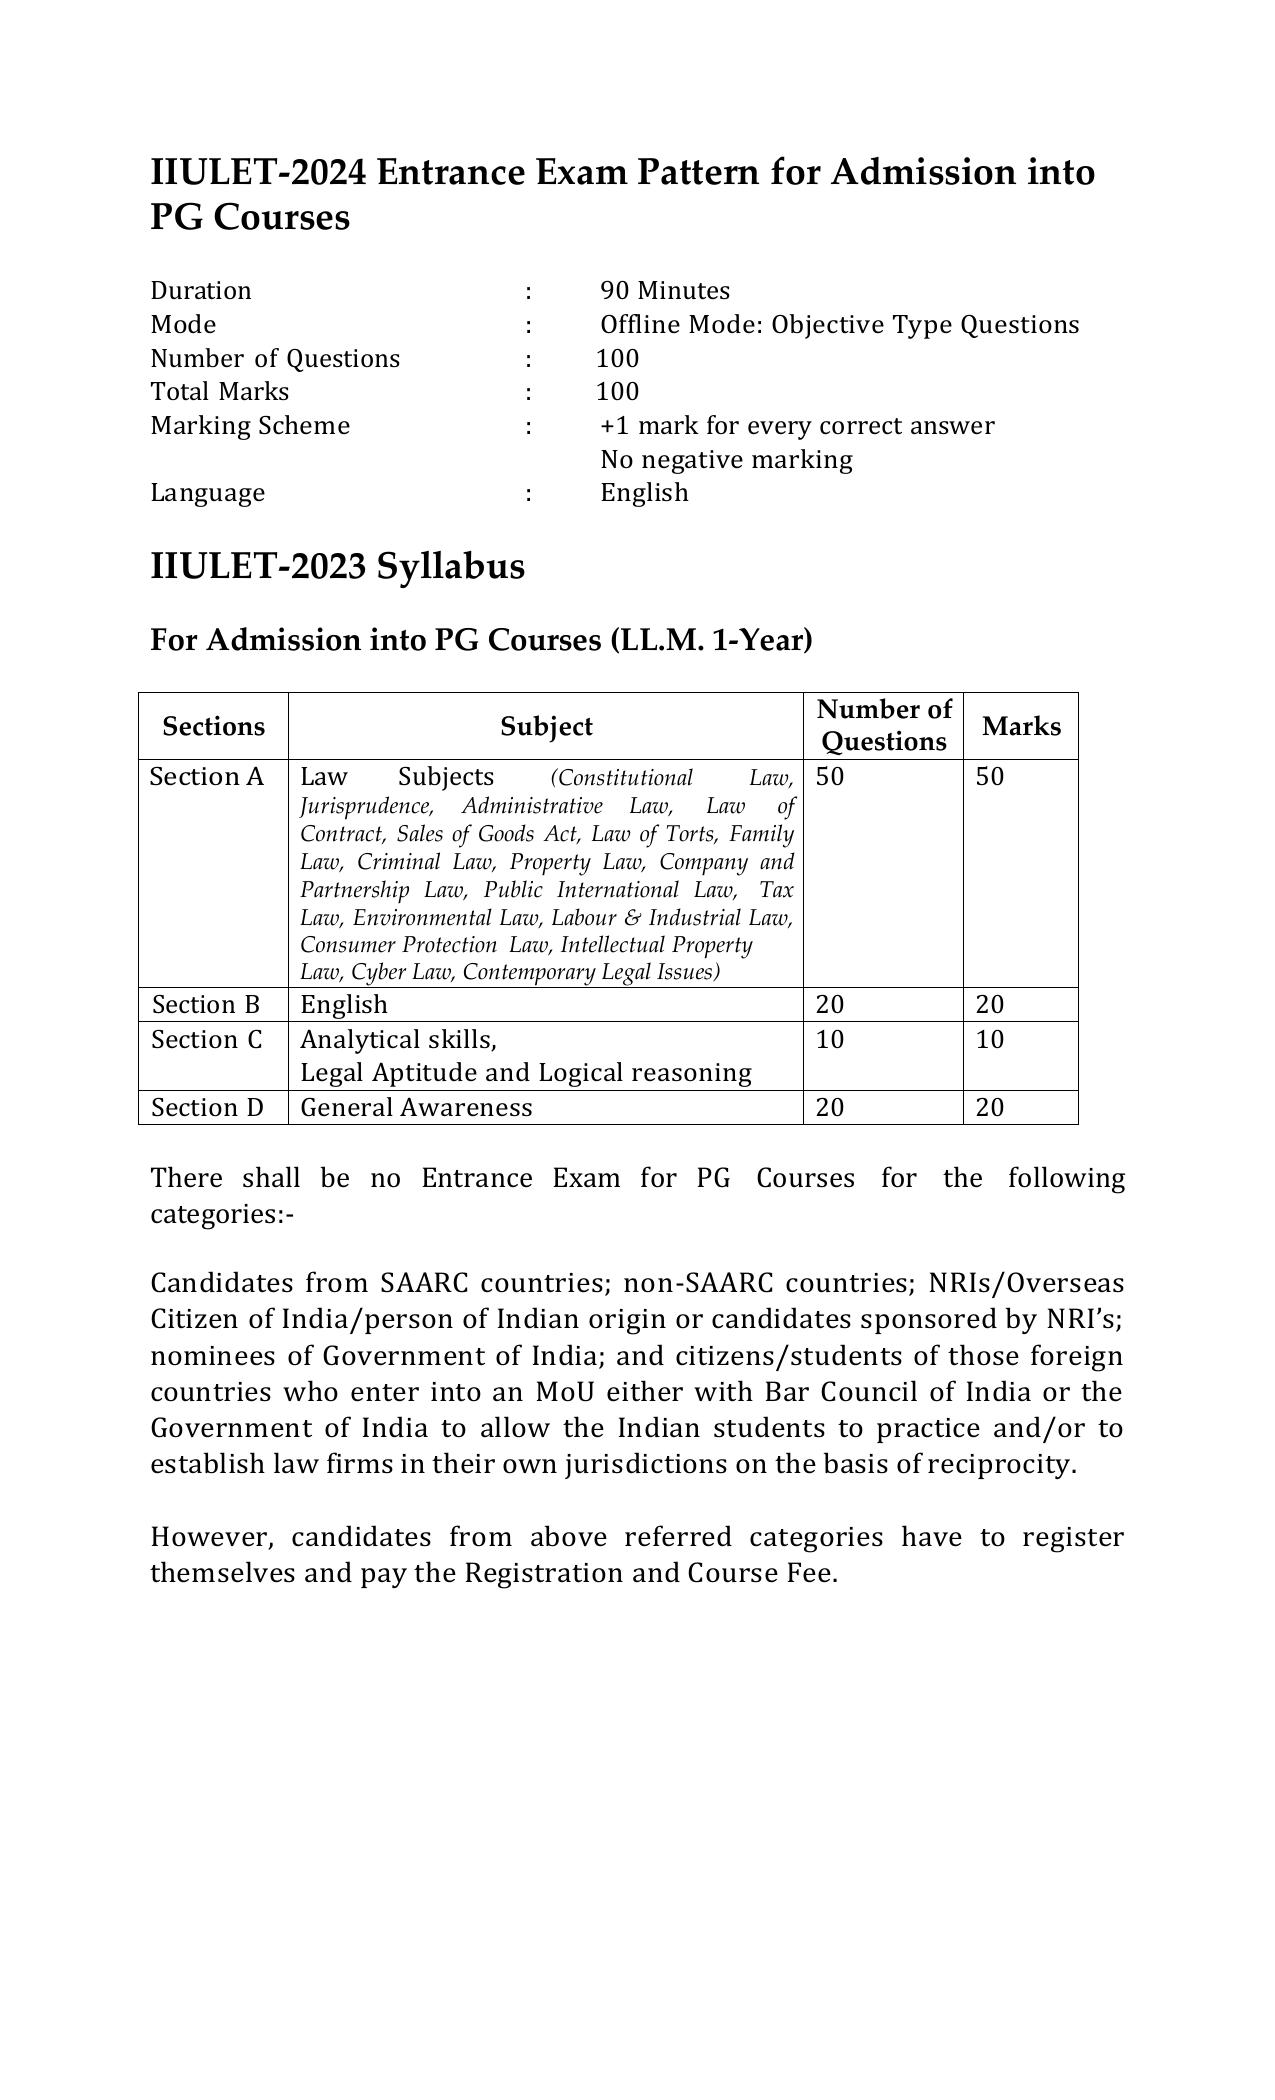 IIULET 2024 Exam and PG Syllabus Pattern - Page 1